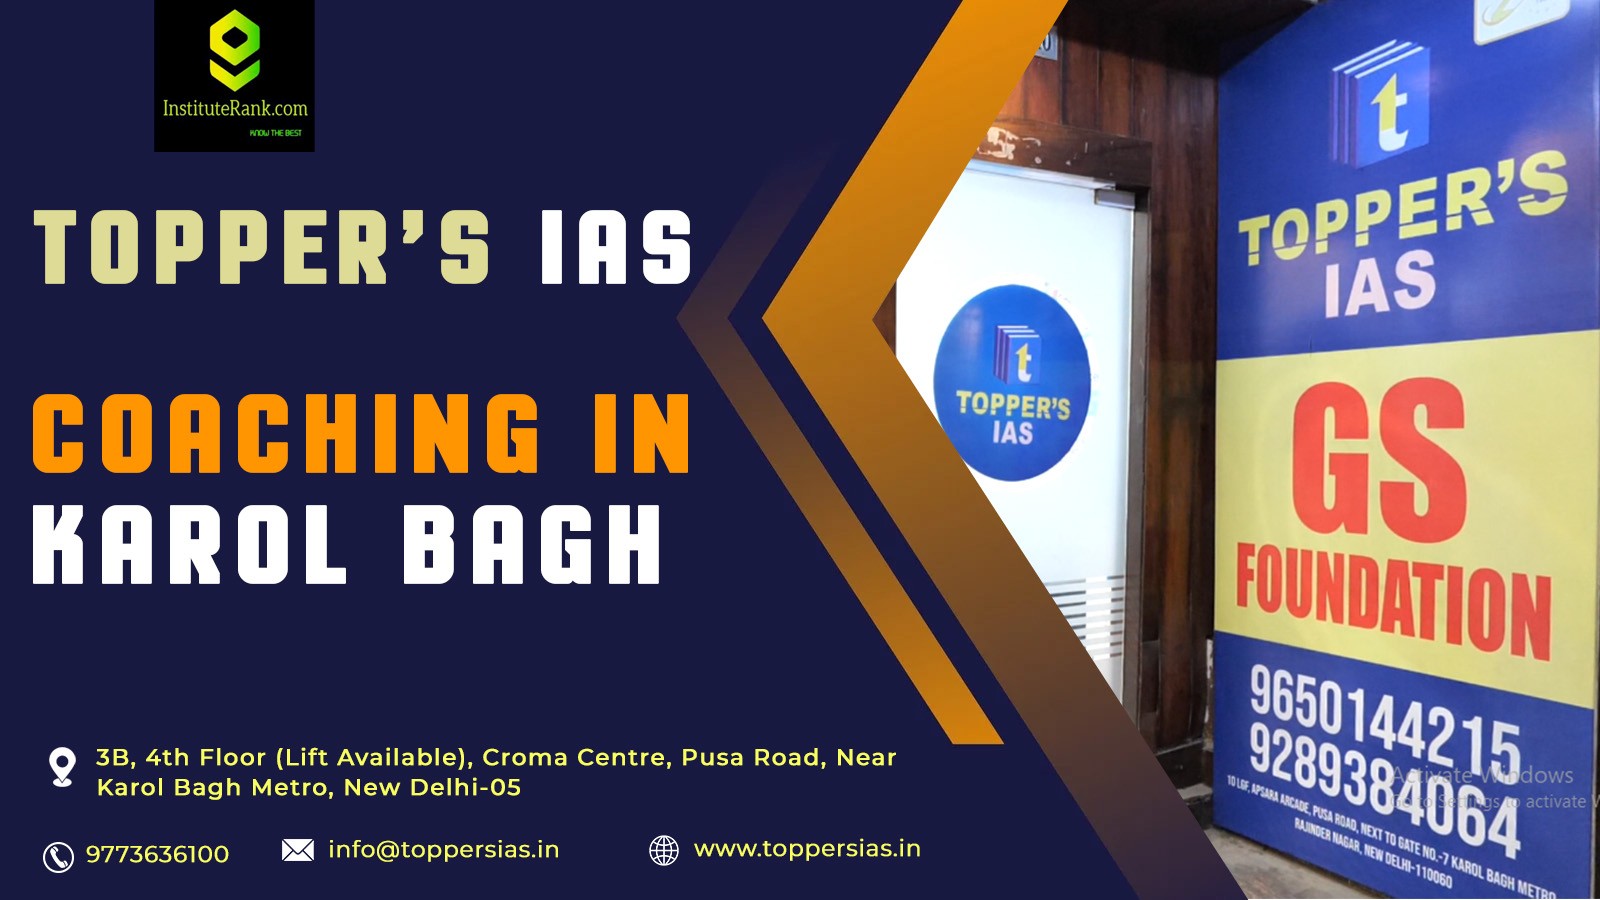 IAS Coaching in Delhi 